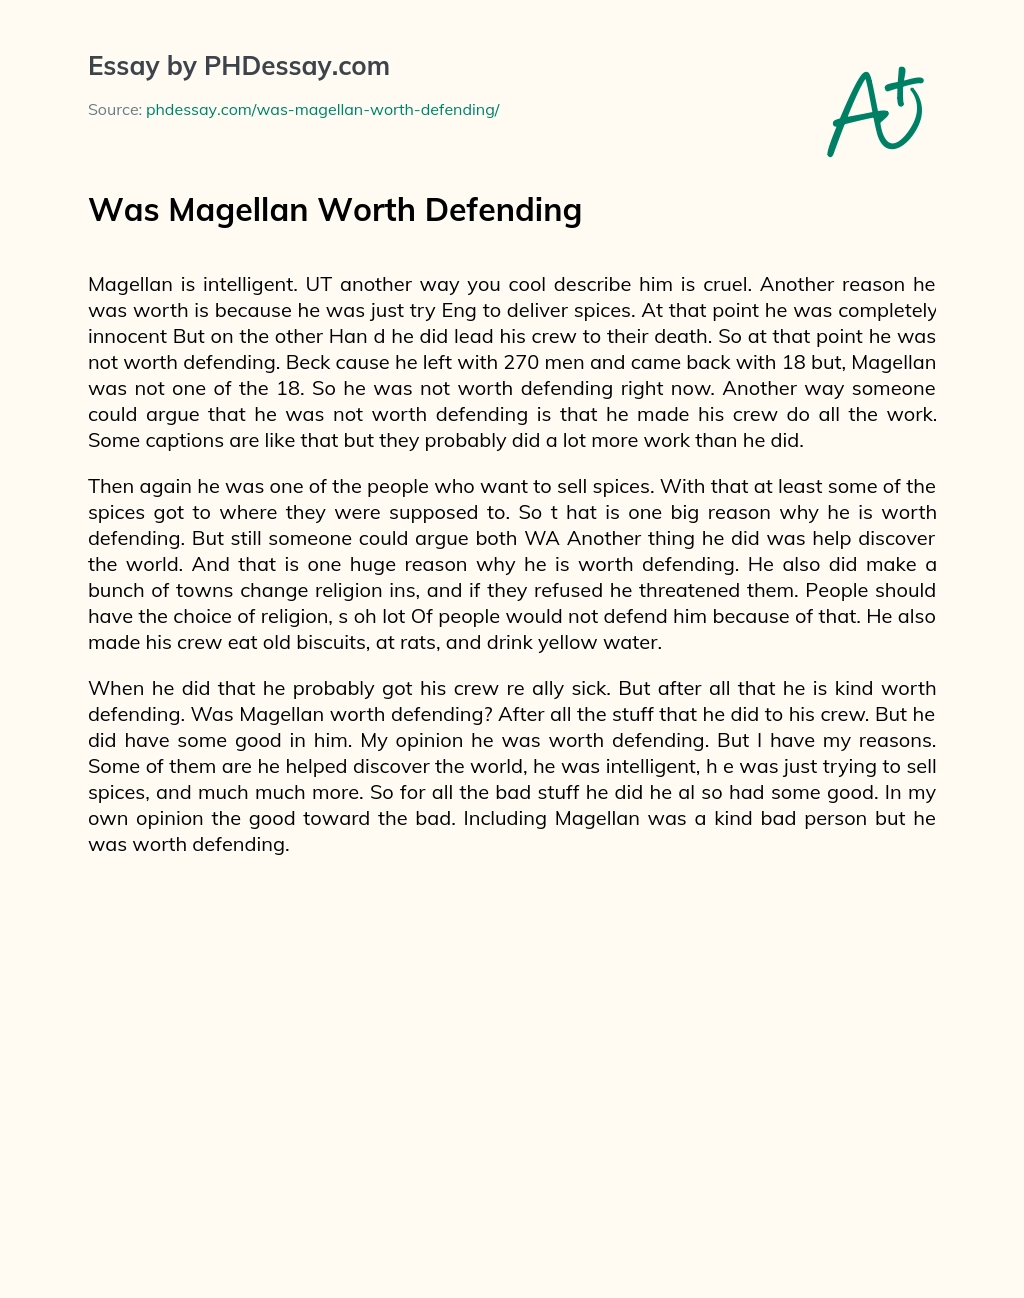 Was Magellan Worth Defending essay